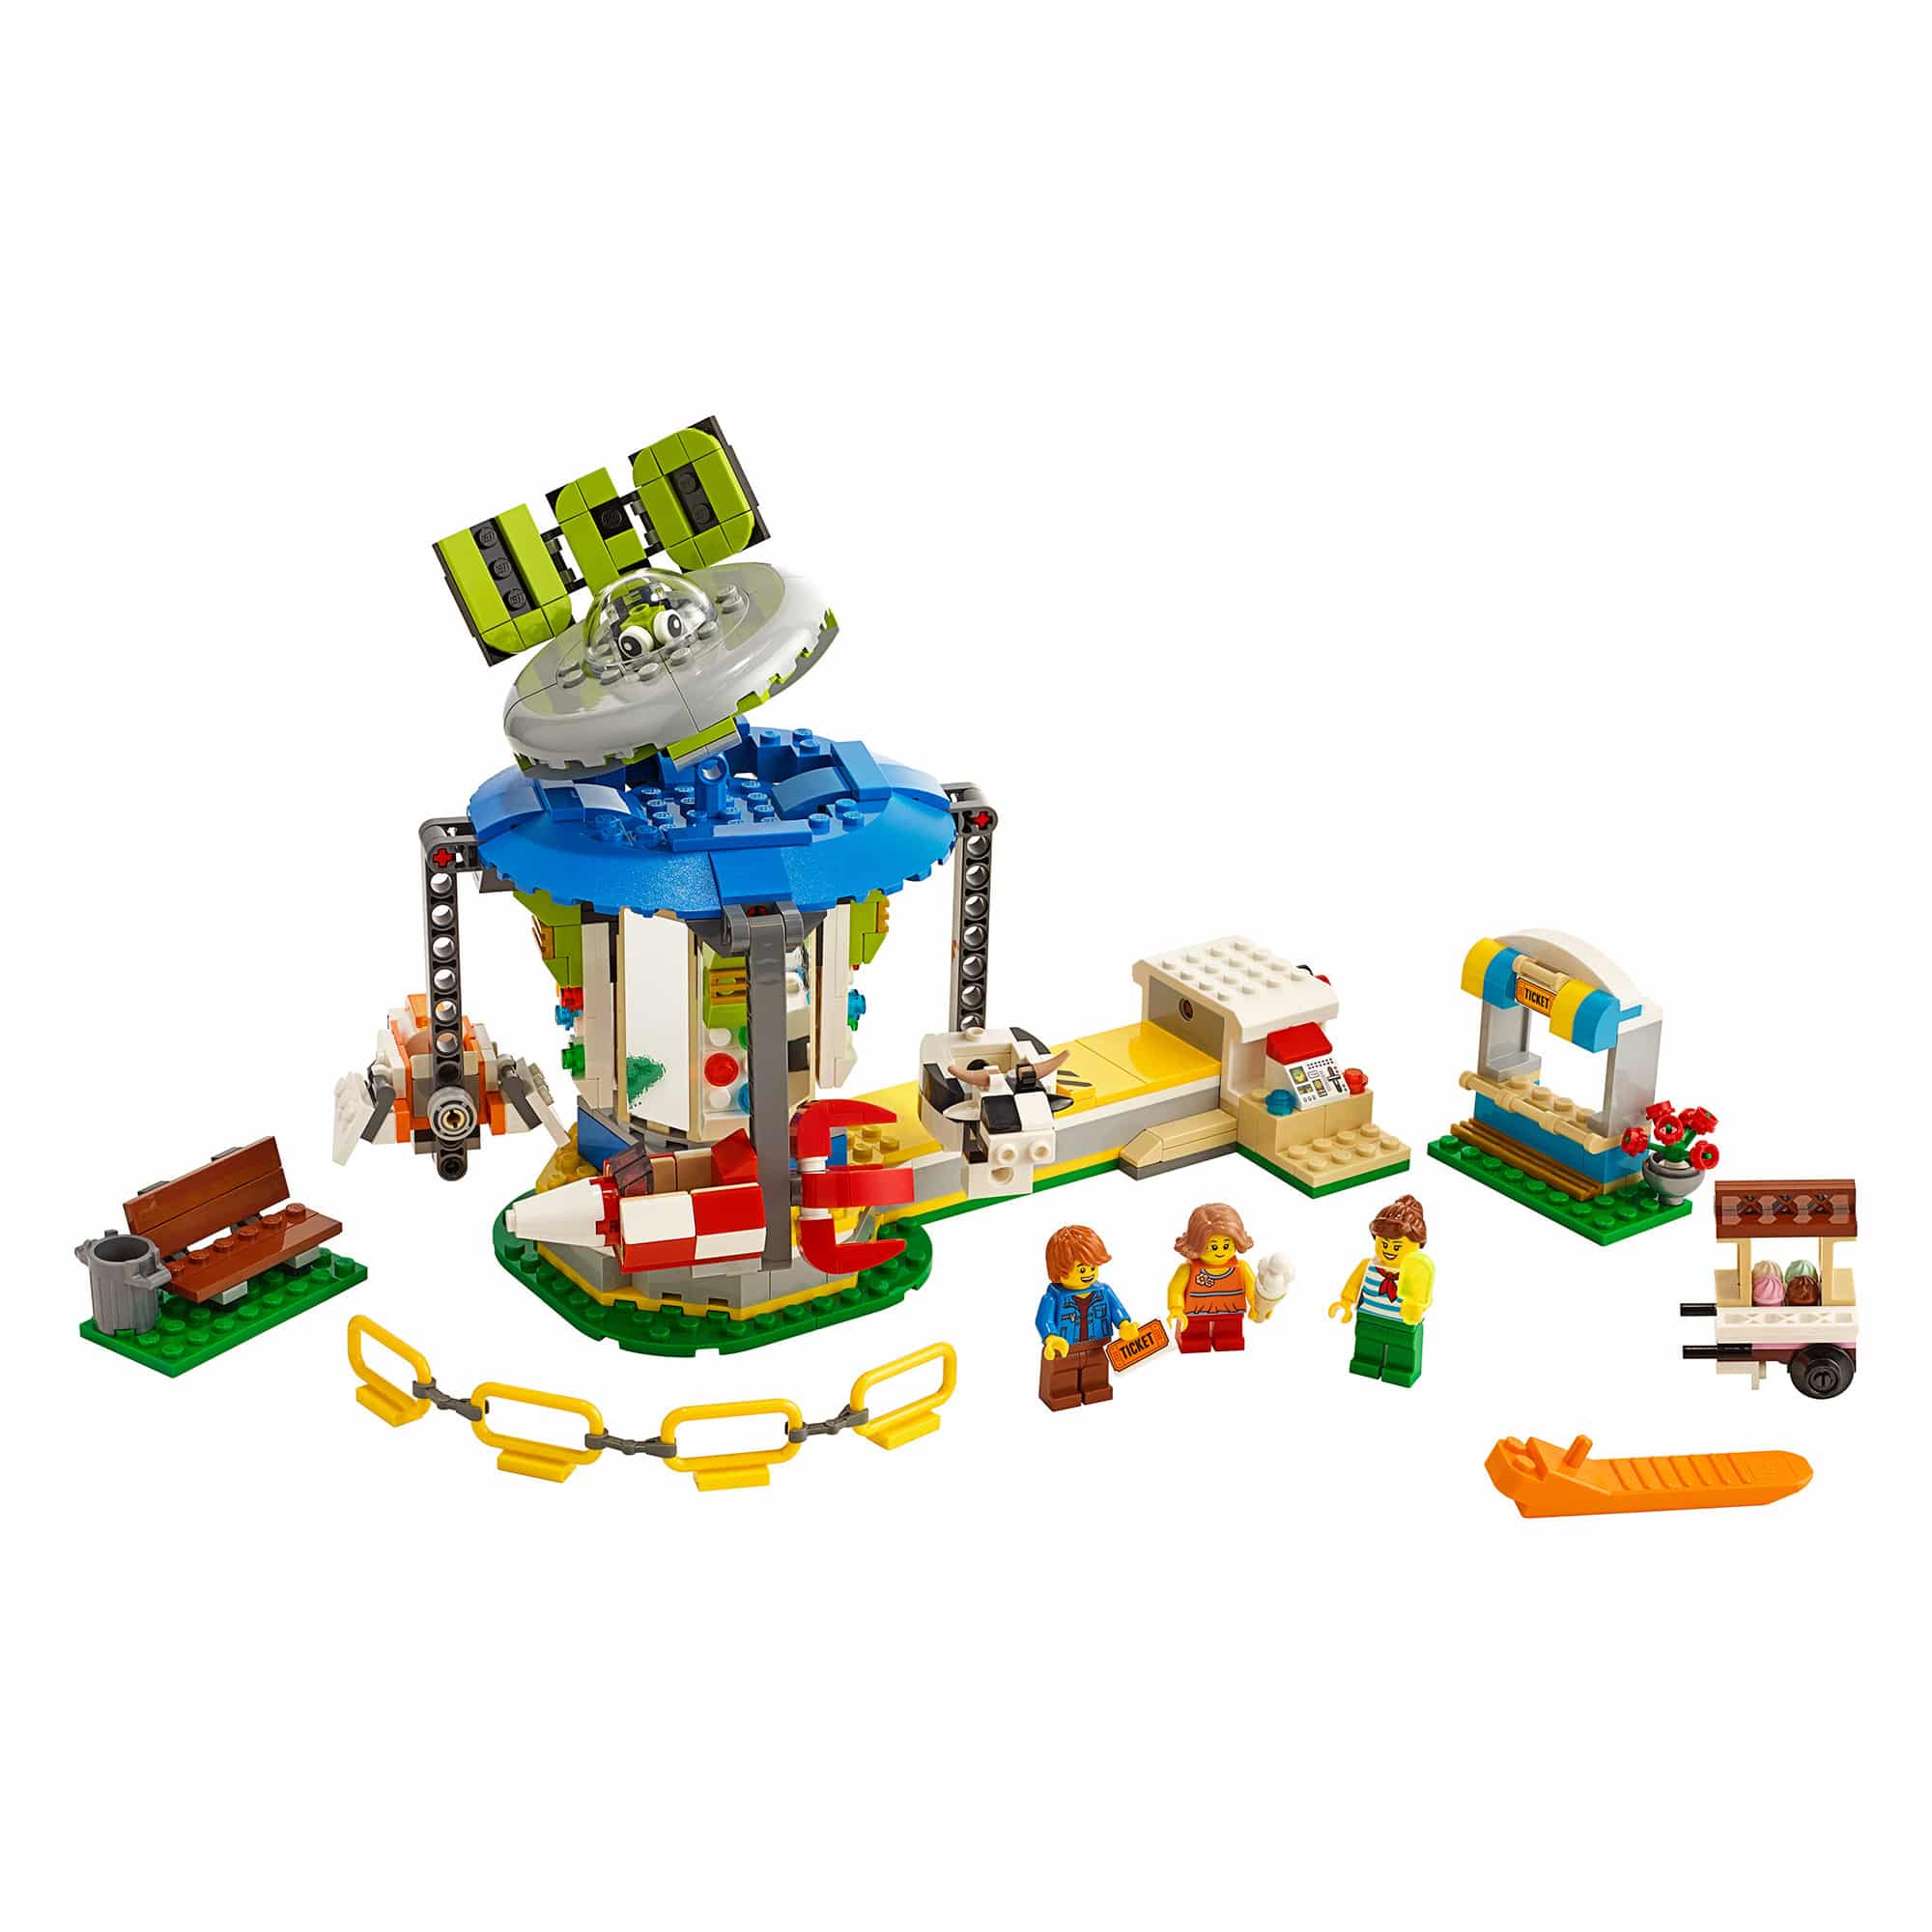 LEGO Creator 31095 - Fairground Carousel